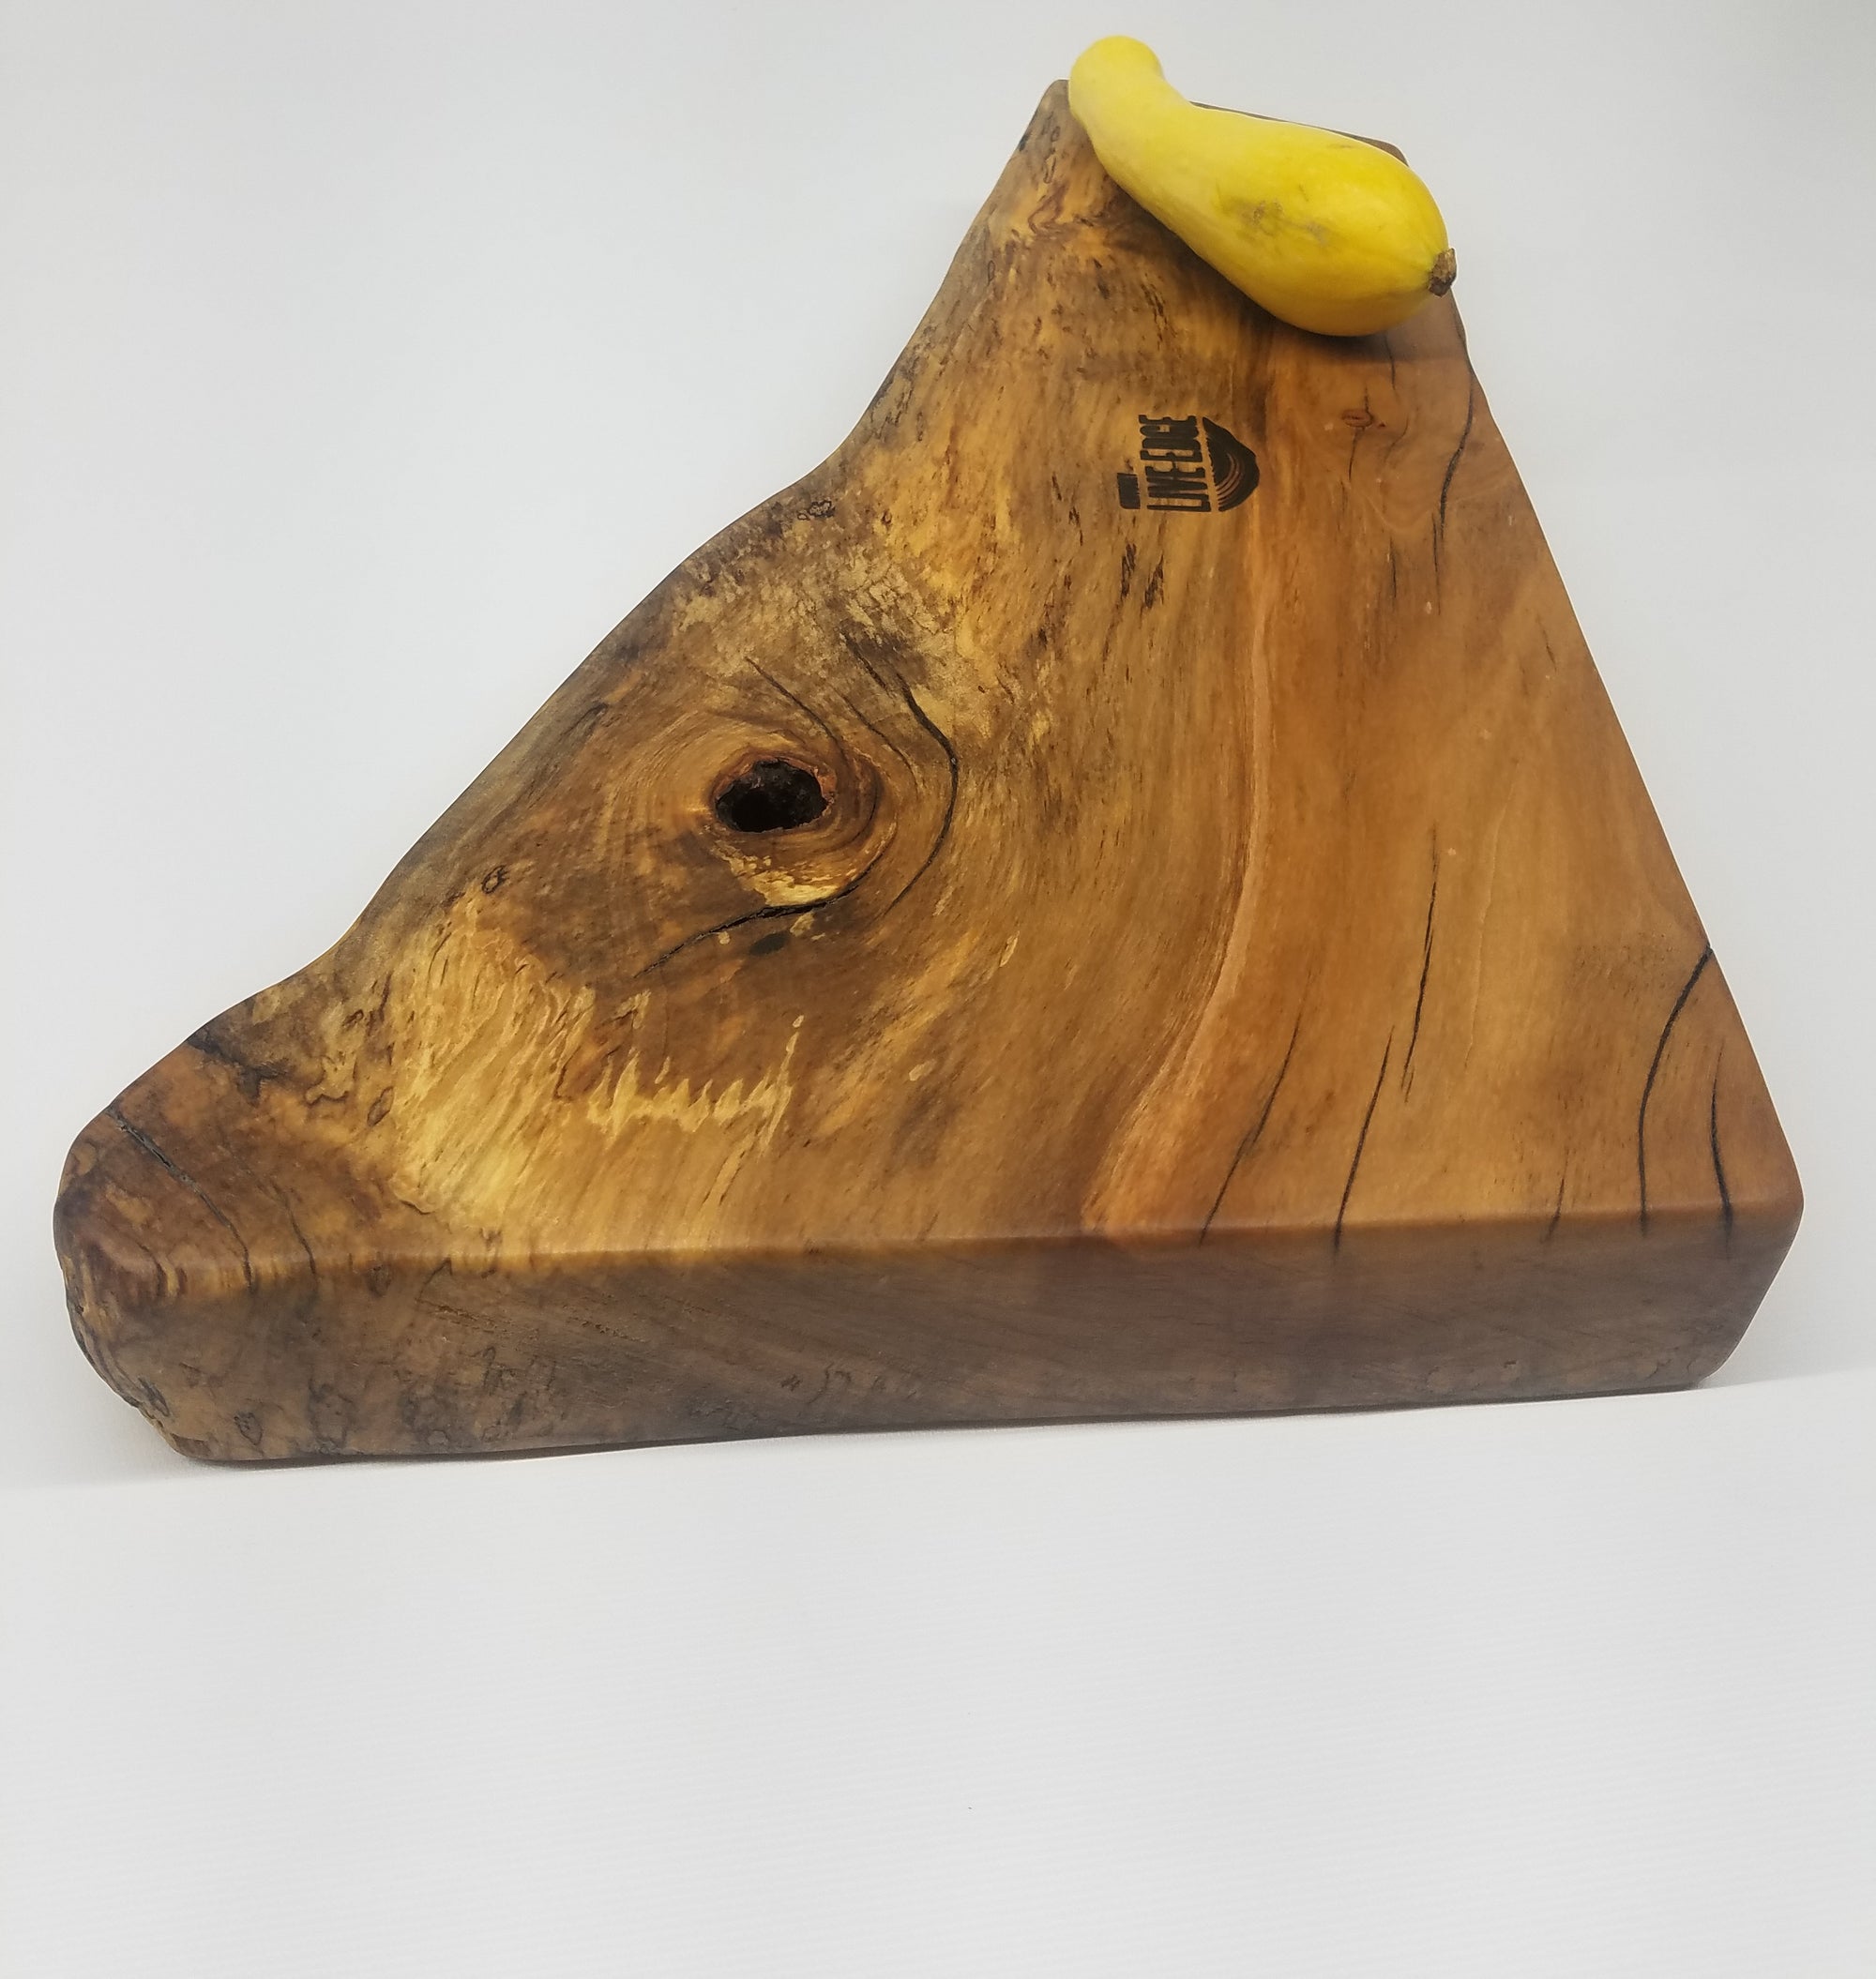 Wooden Serving Board- Long- Large- Charcuterie Board- Cheese Board- Br -  Kentucky LiveEdge